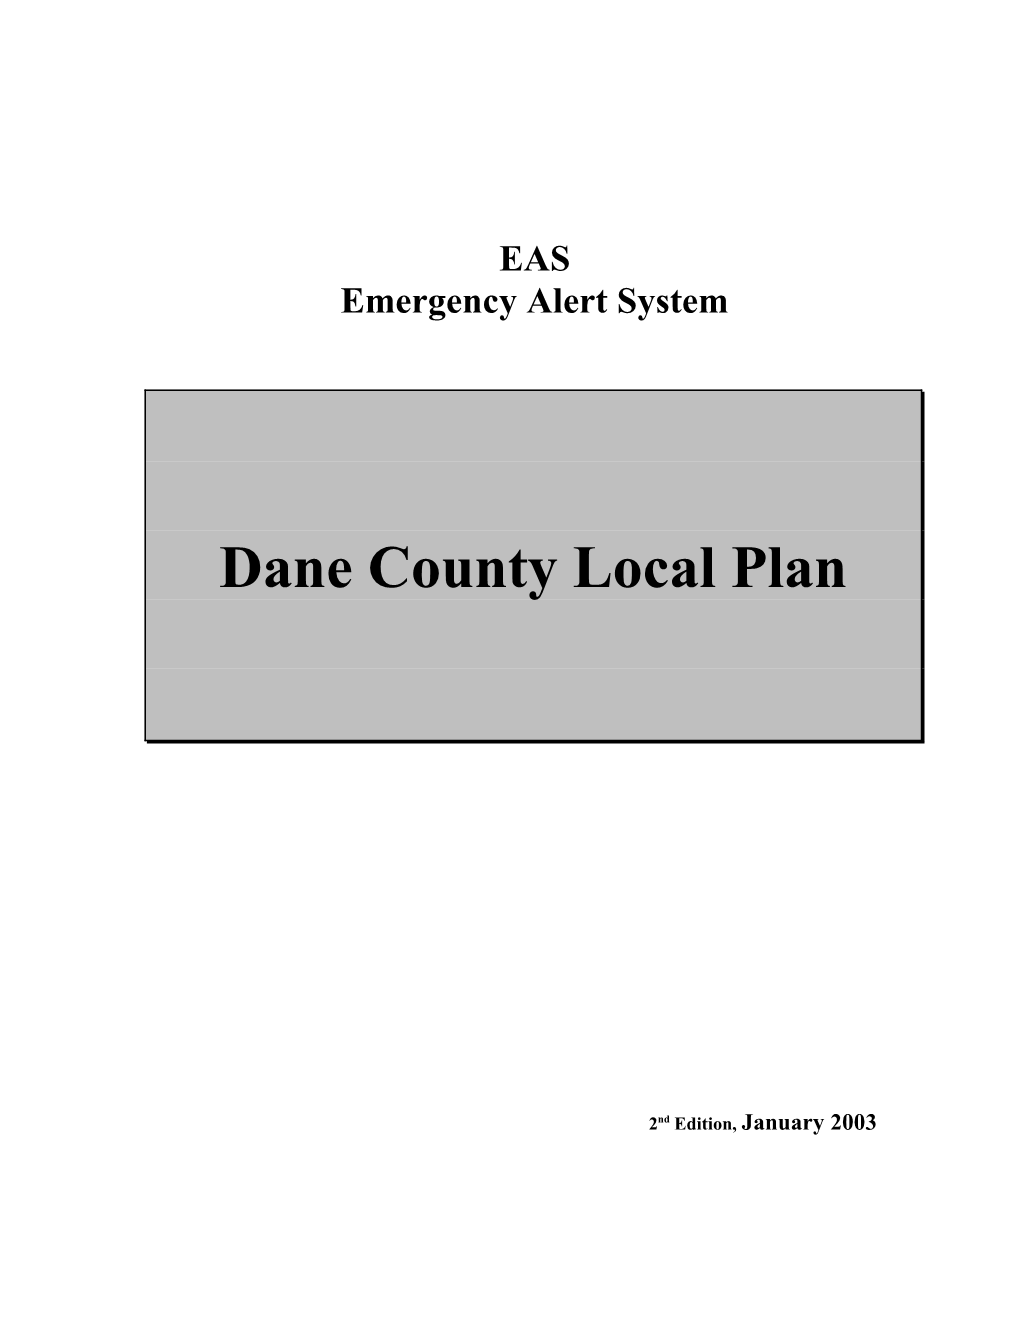 Dane County Local Plan